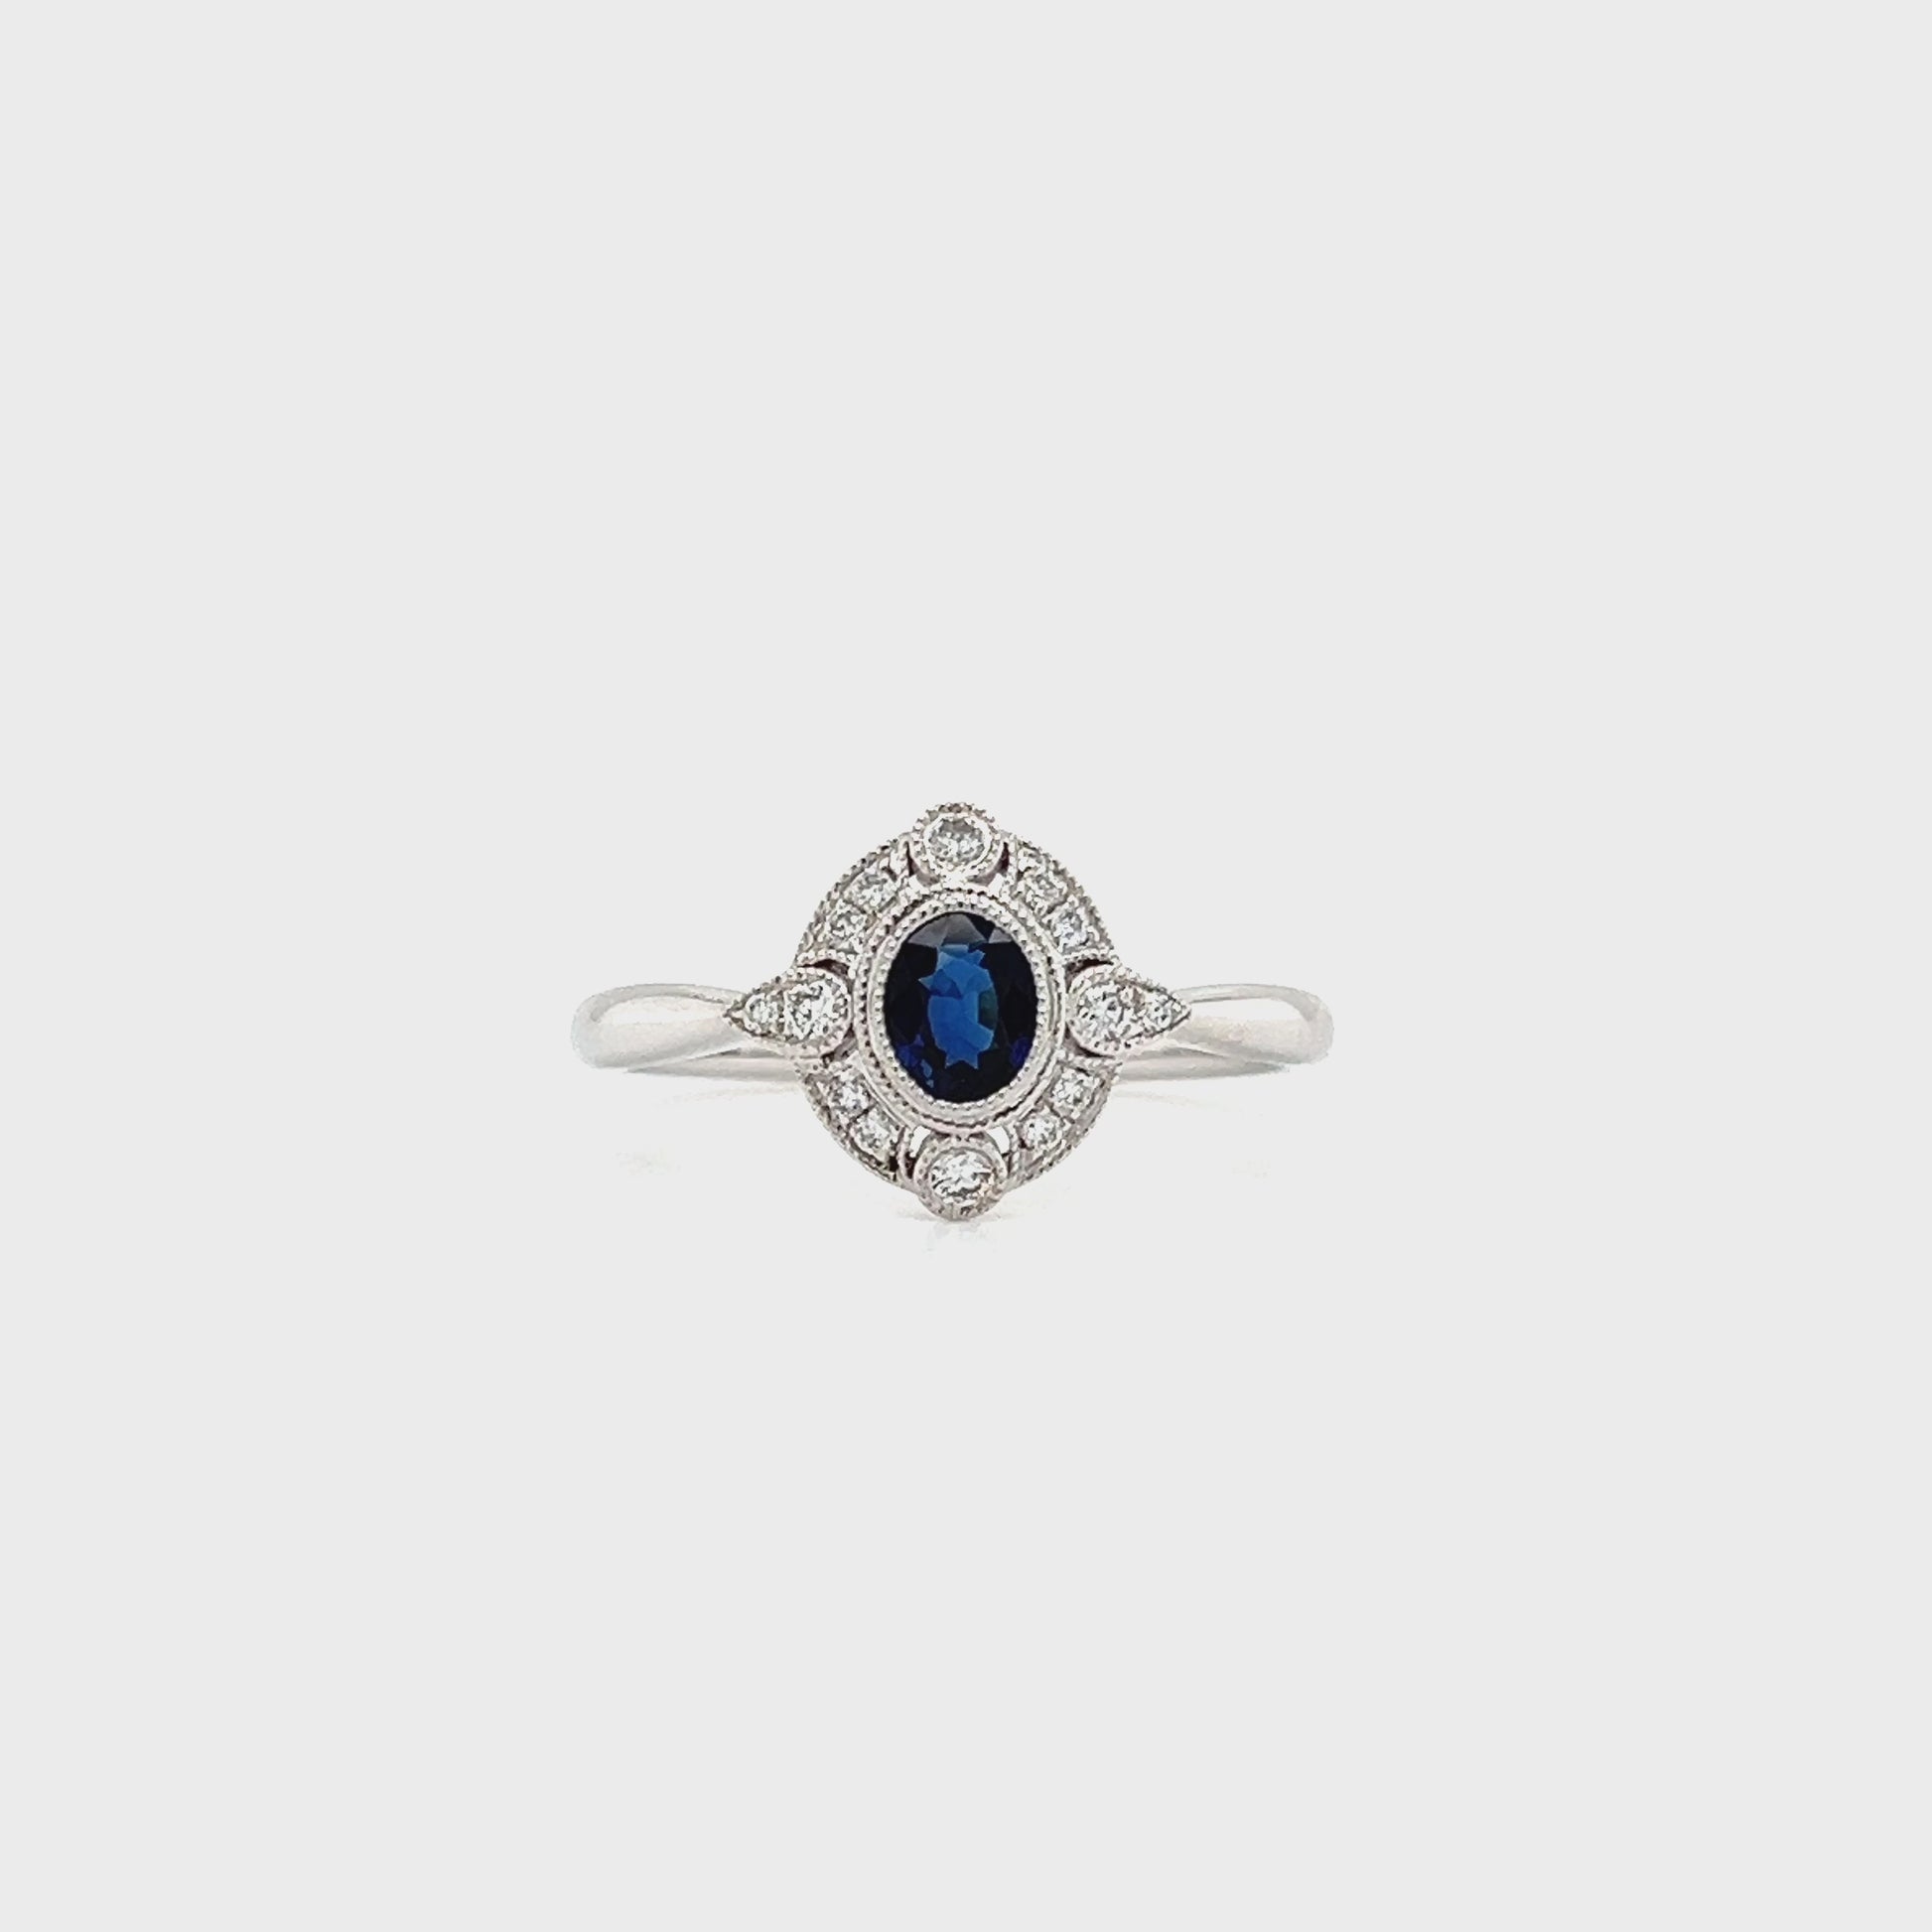 Blue Sapphire Ring with Milgrain Diamond Halo in 14K White Gold Video